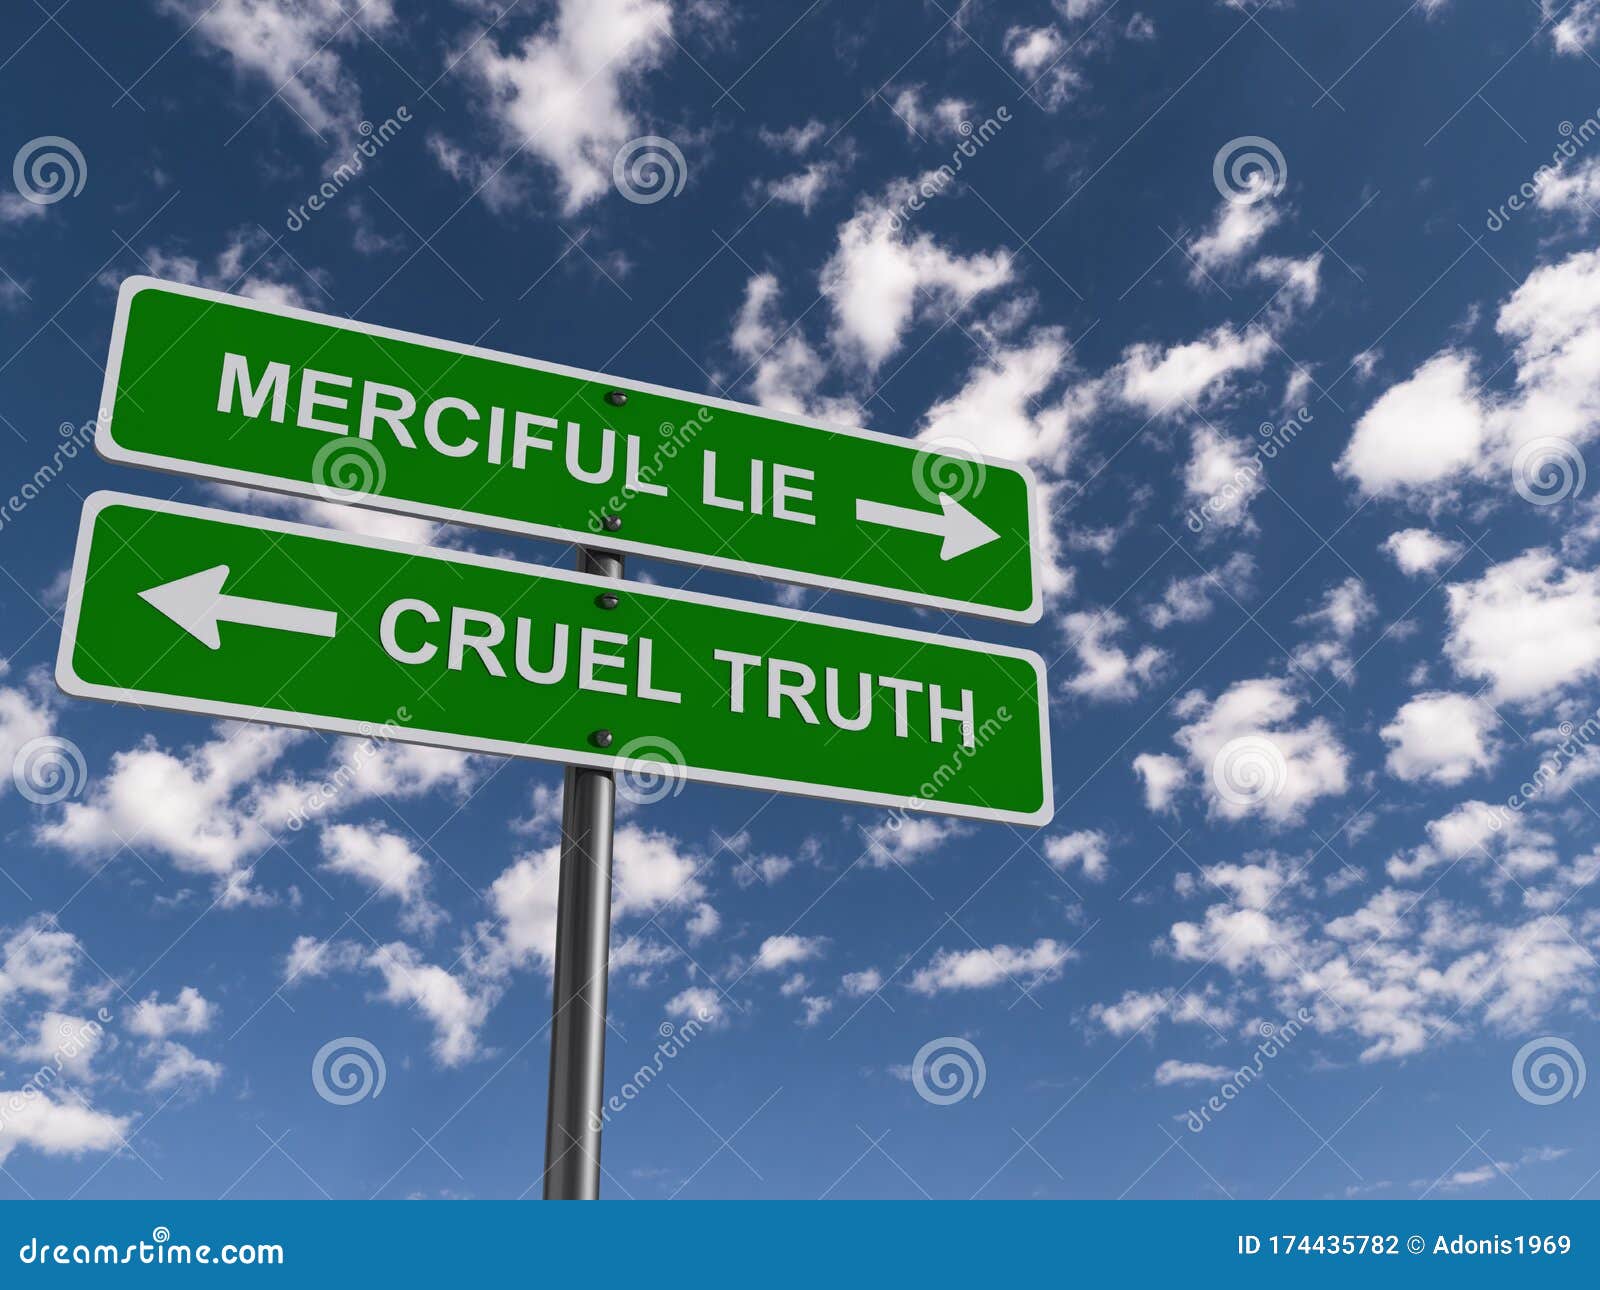 merciful lie cruel truth traffic sign